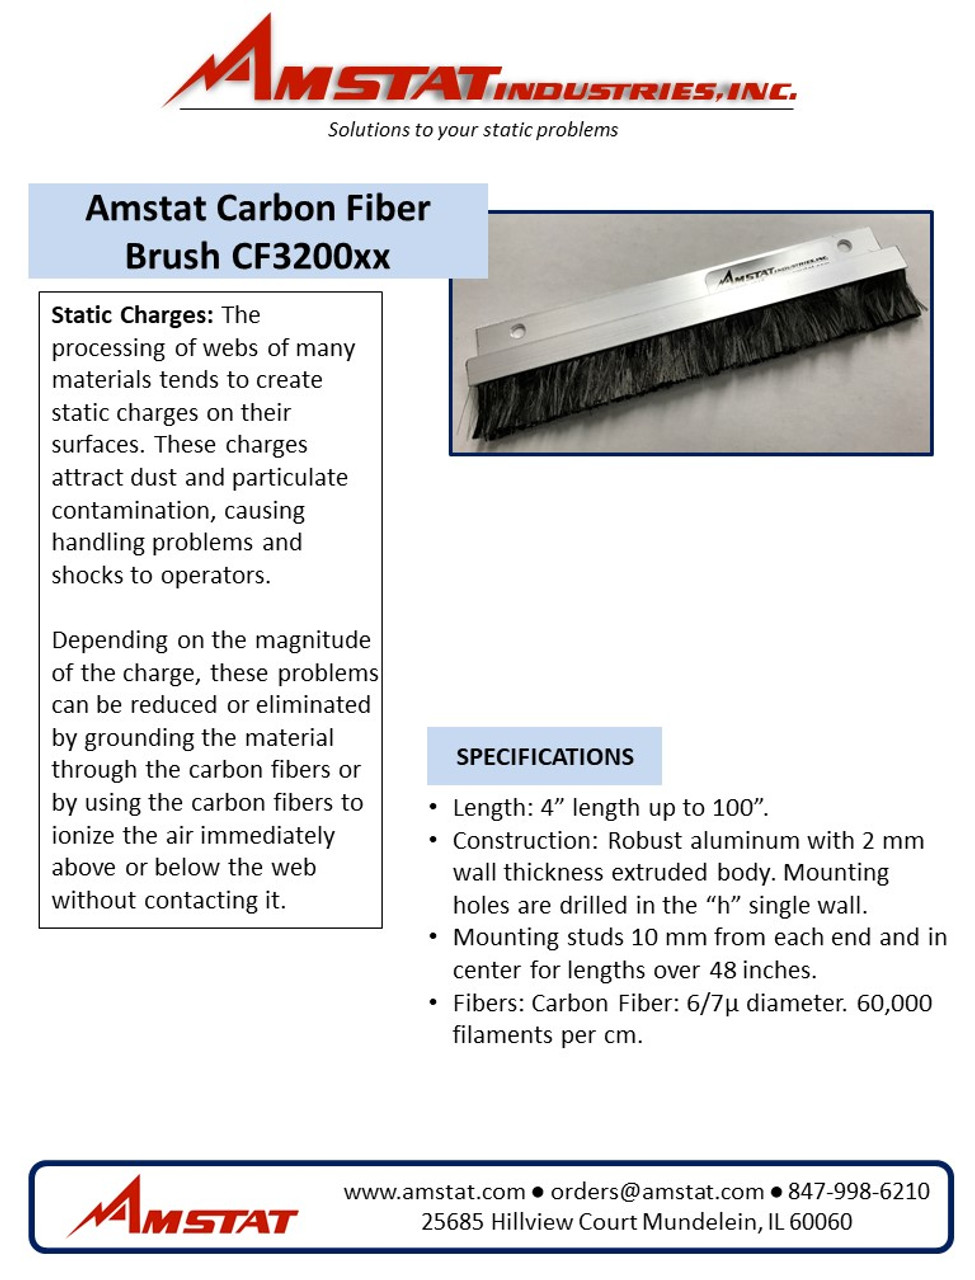 Carbon Fiber Brushes (18mm bristles) - $6.00/inch